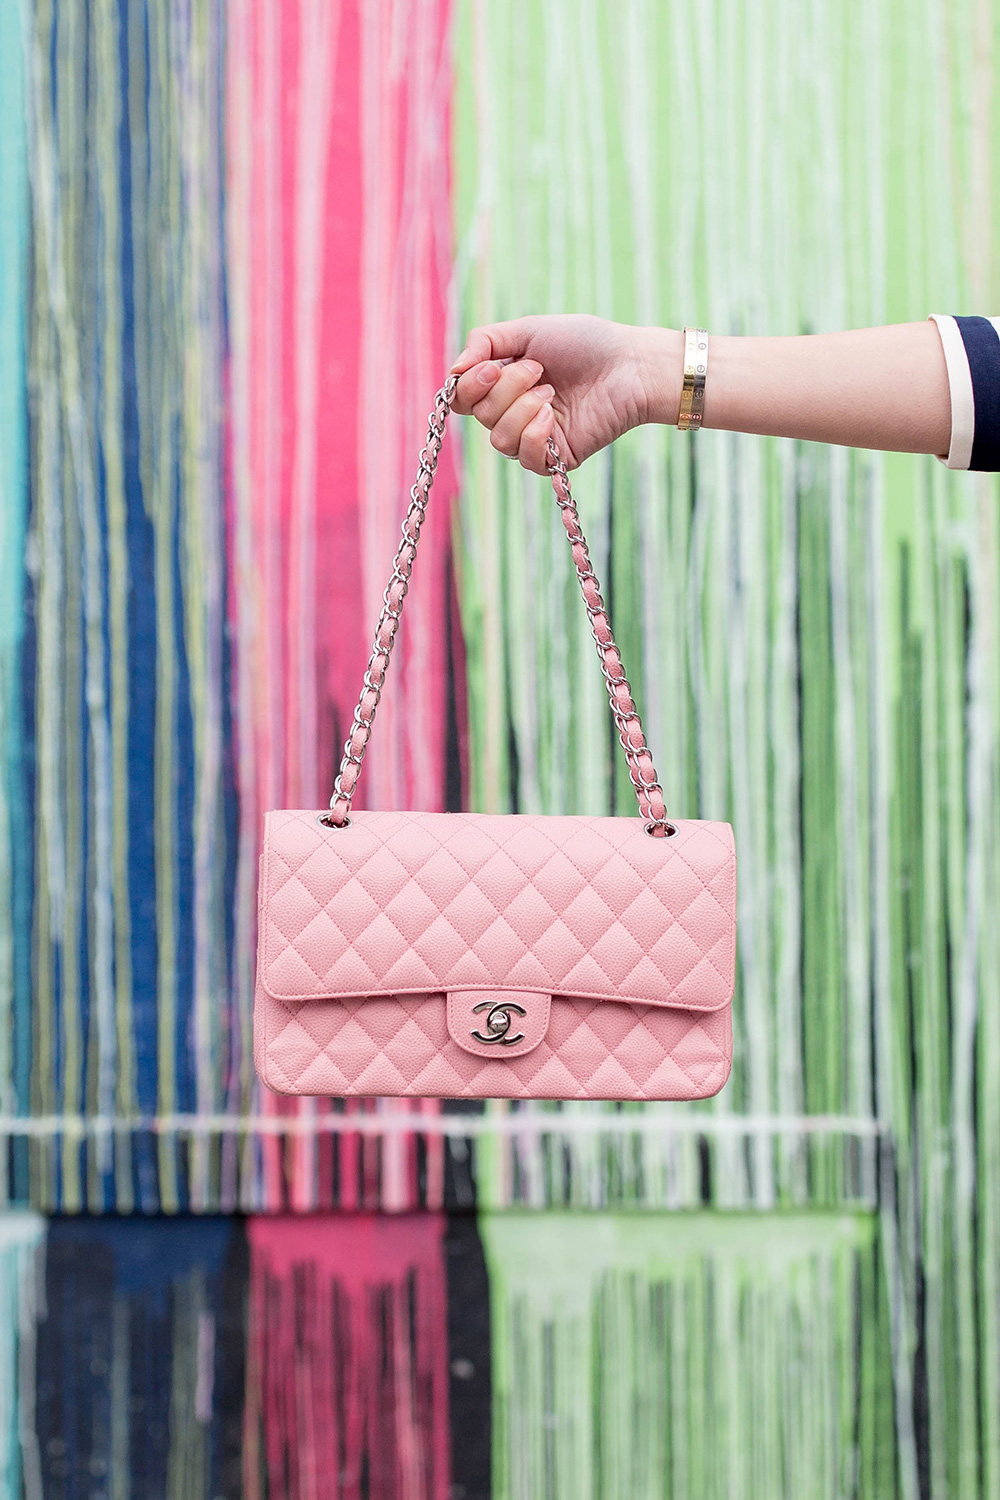 Pink Chanel Flap Bag